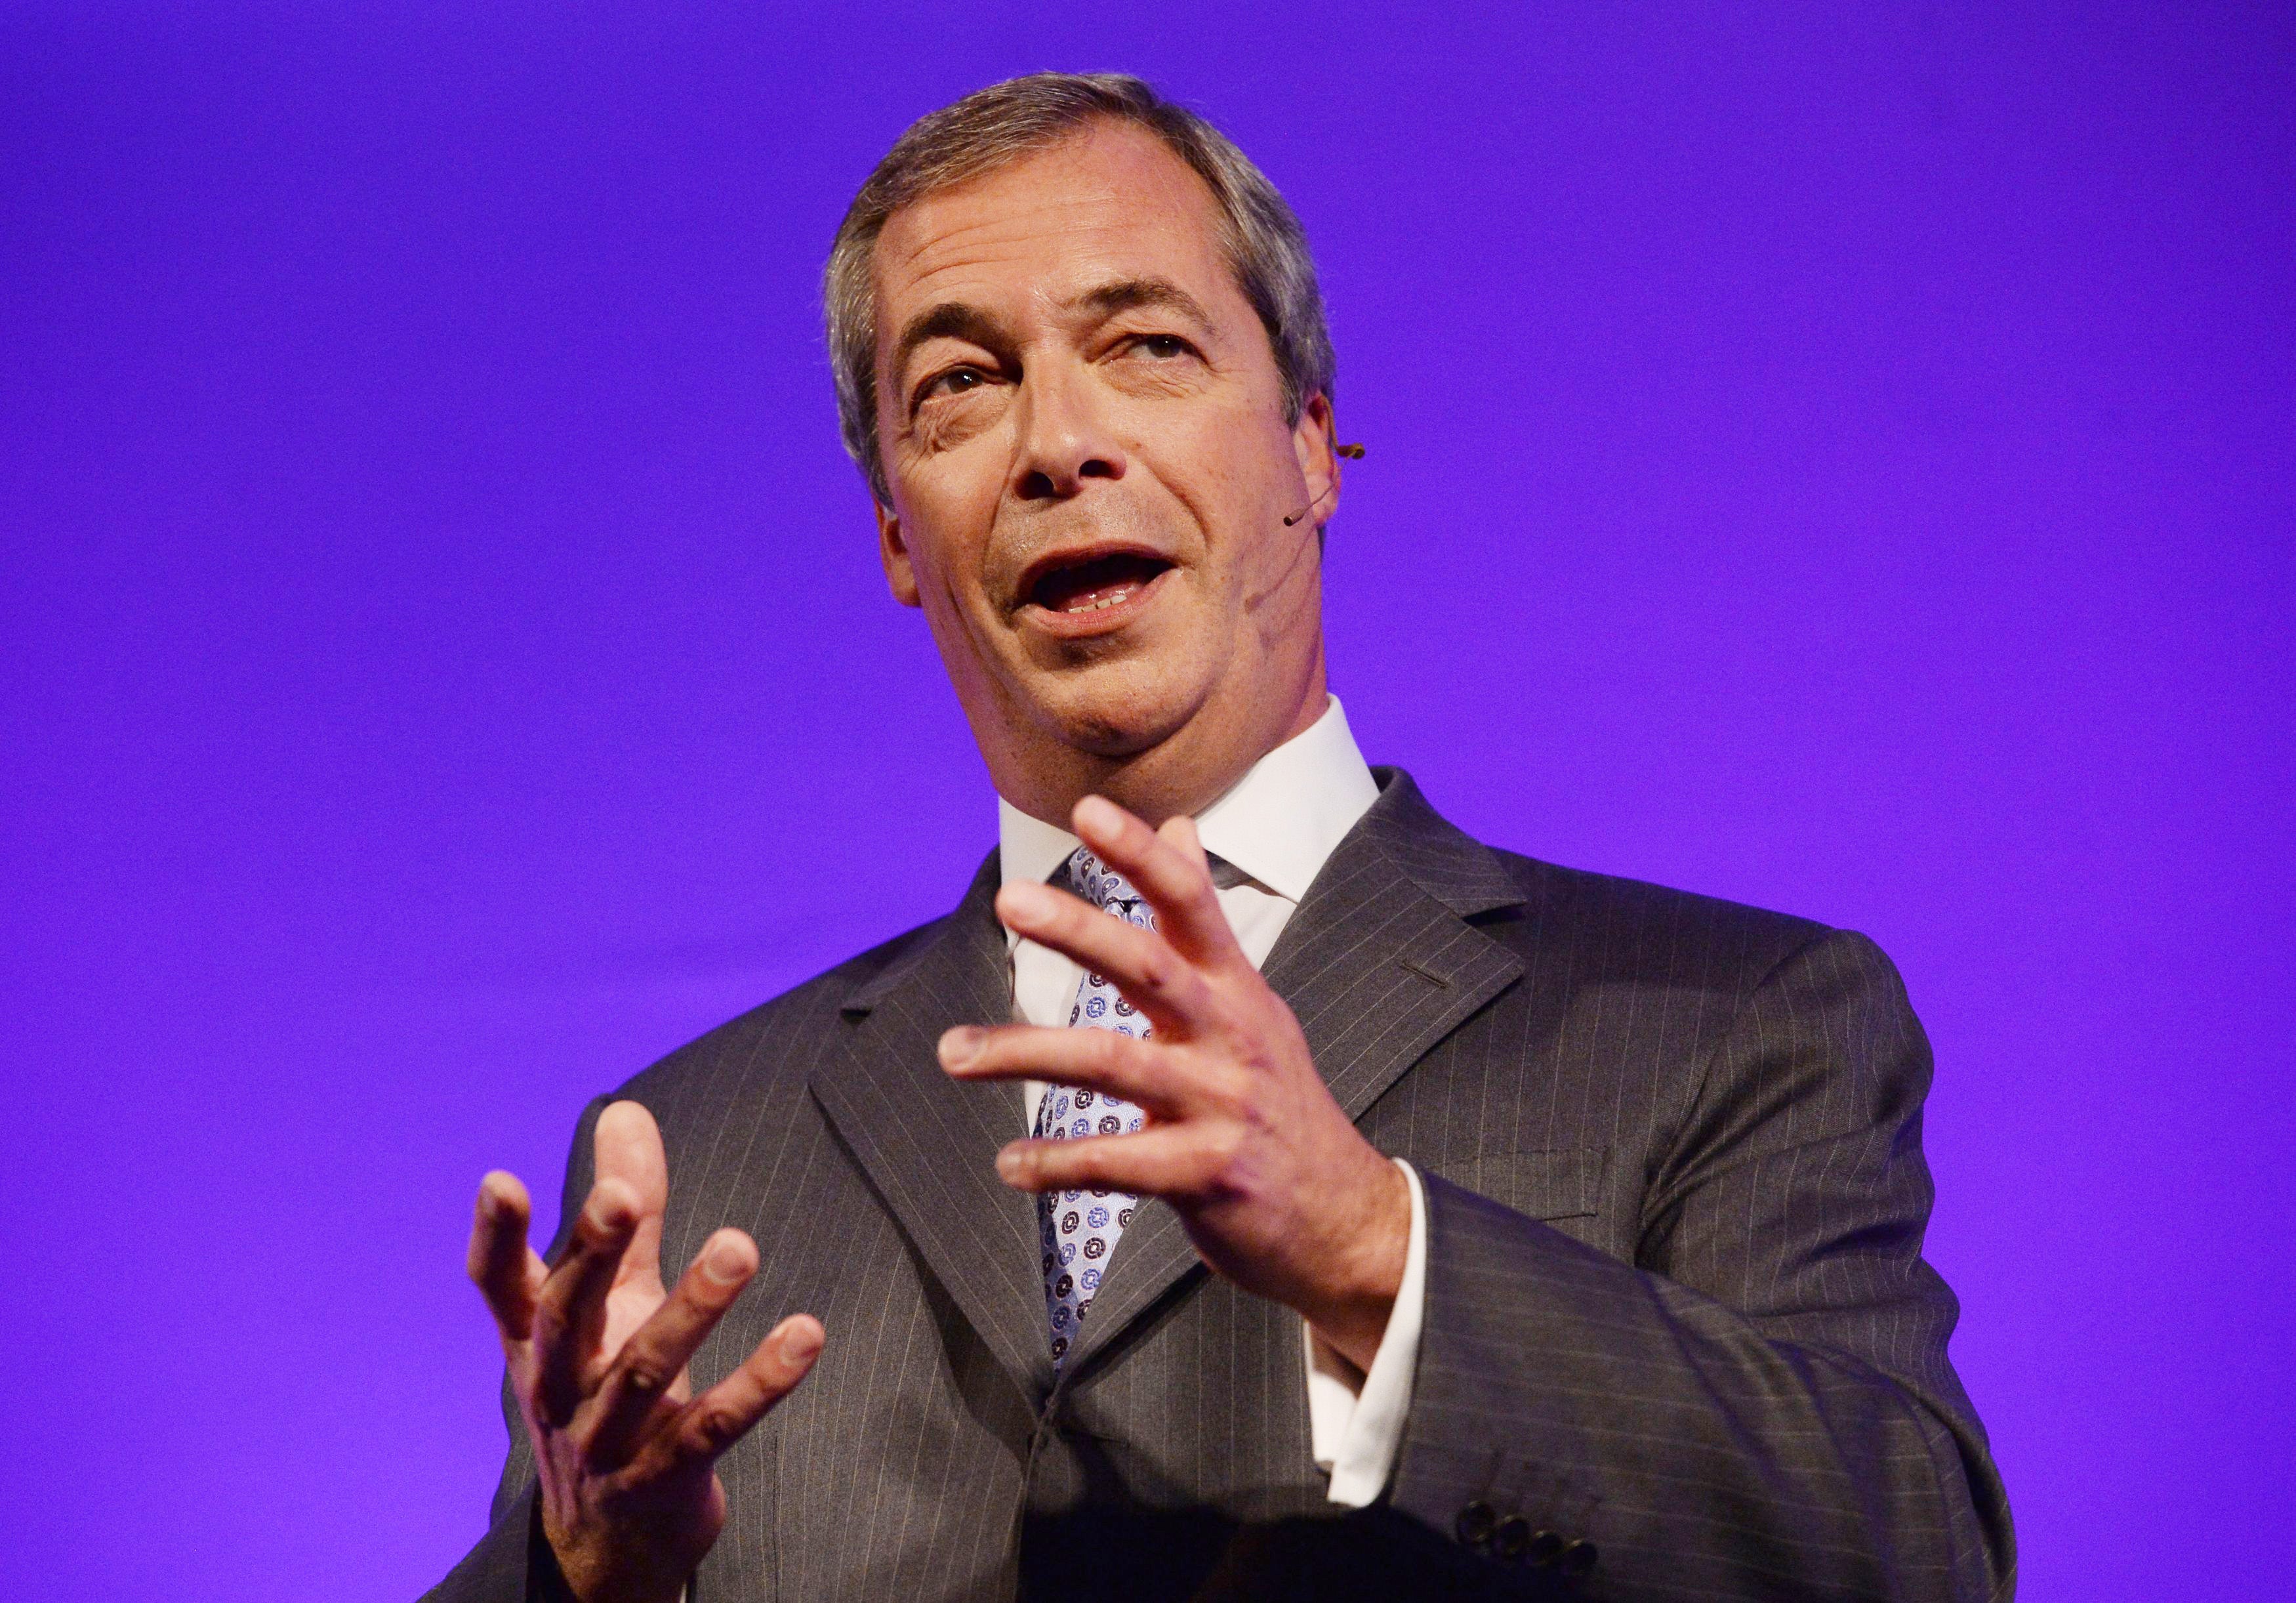 &#13;
Nigel Farage, leader of the Leave campaign&#13;